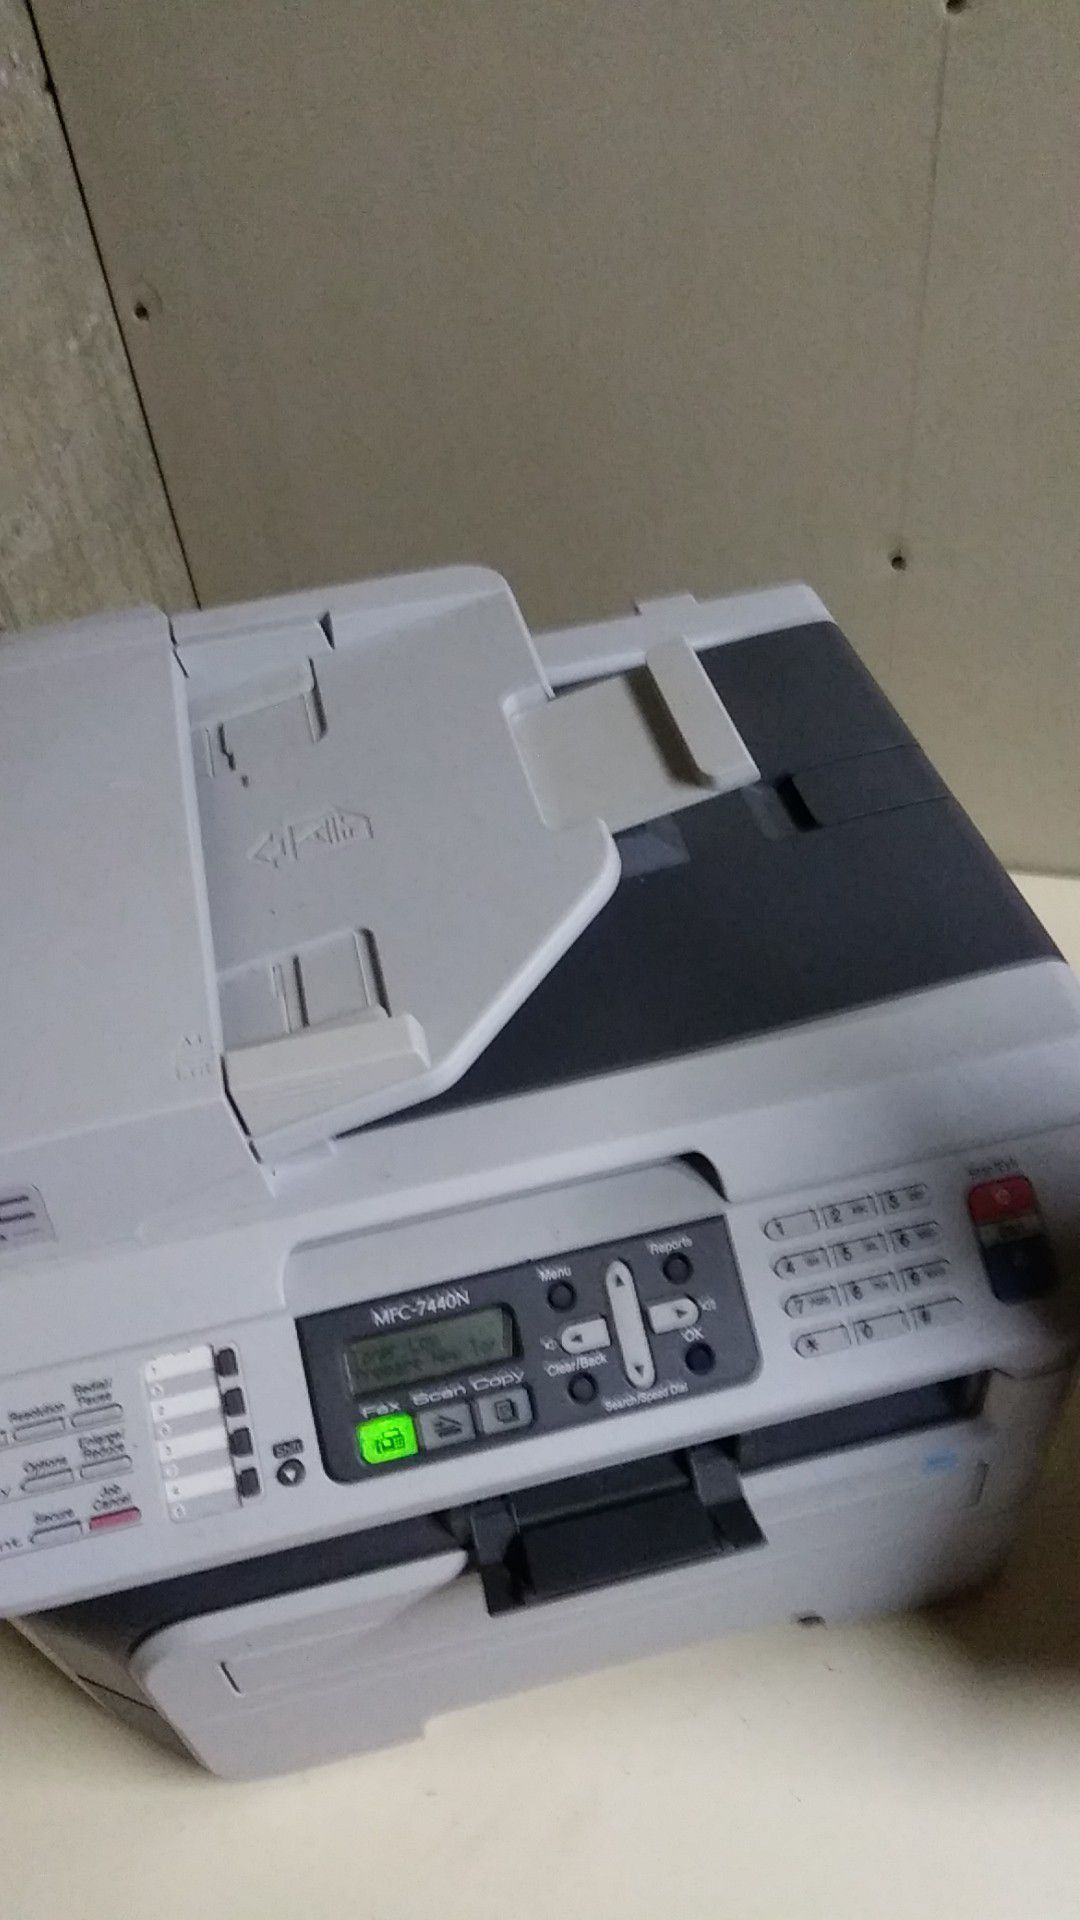 Brother MFC 7440N laser multifunction printer